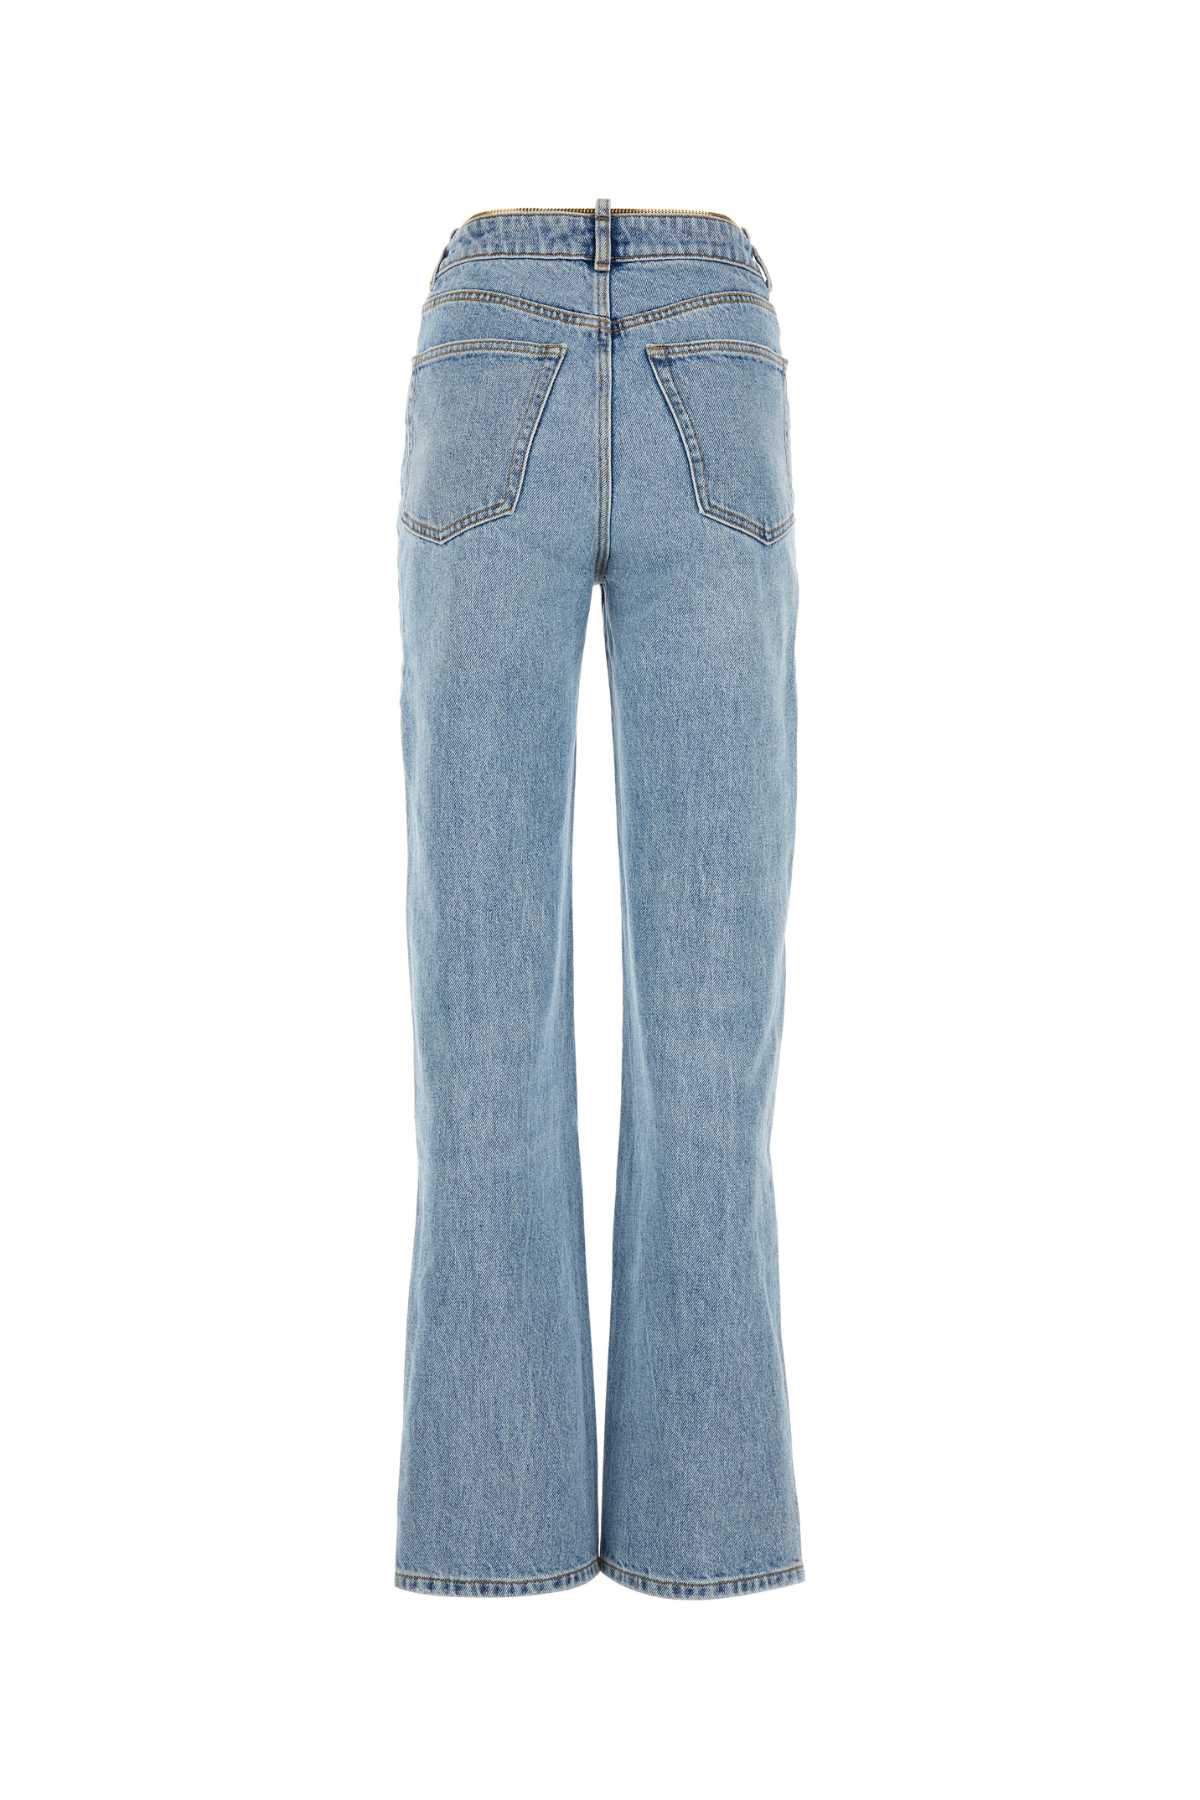 Alexander Wang Denim Jeans In Vintagefadedindigo